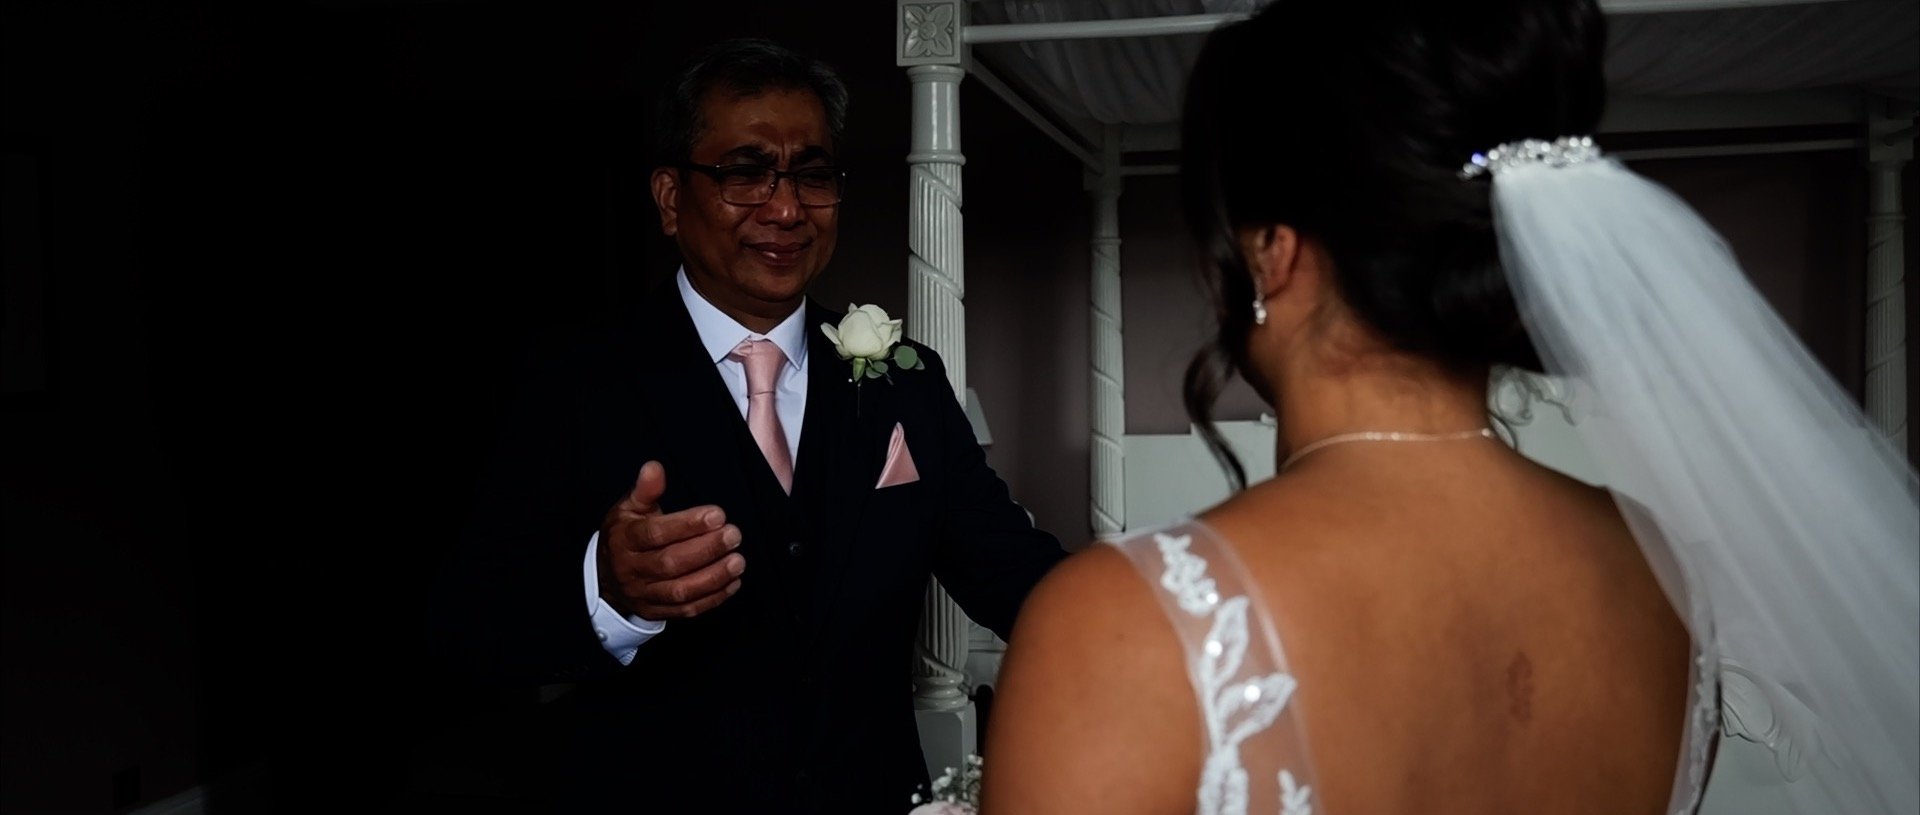 Dad sees his daughter the bride before she gets married. Wedding video Essex 3 Cheers Media.jpg